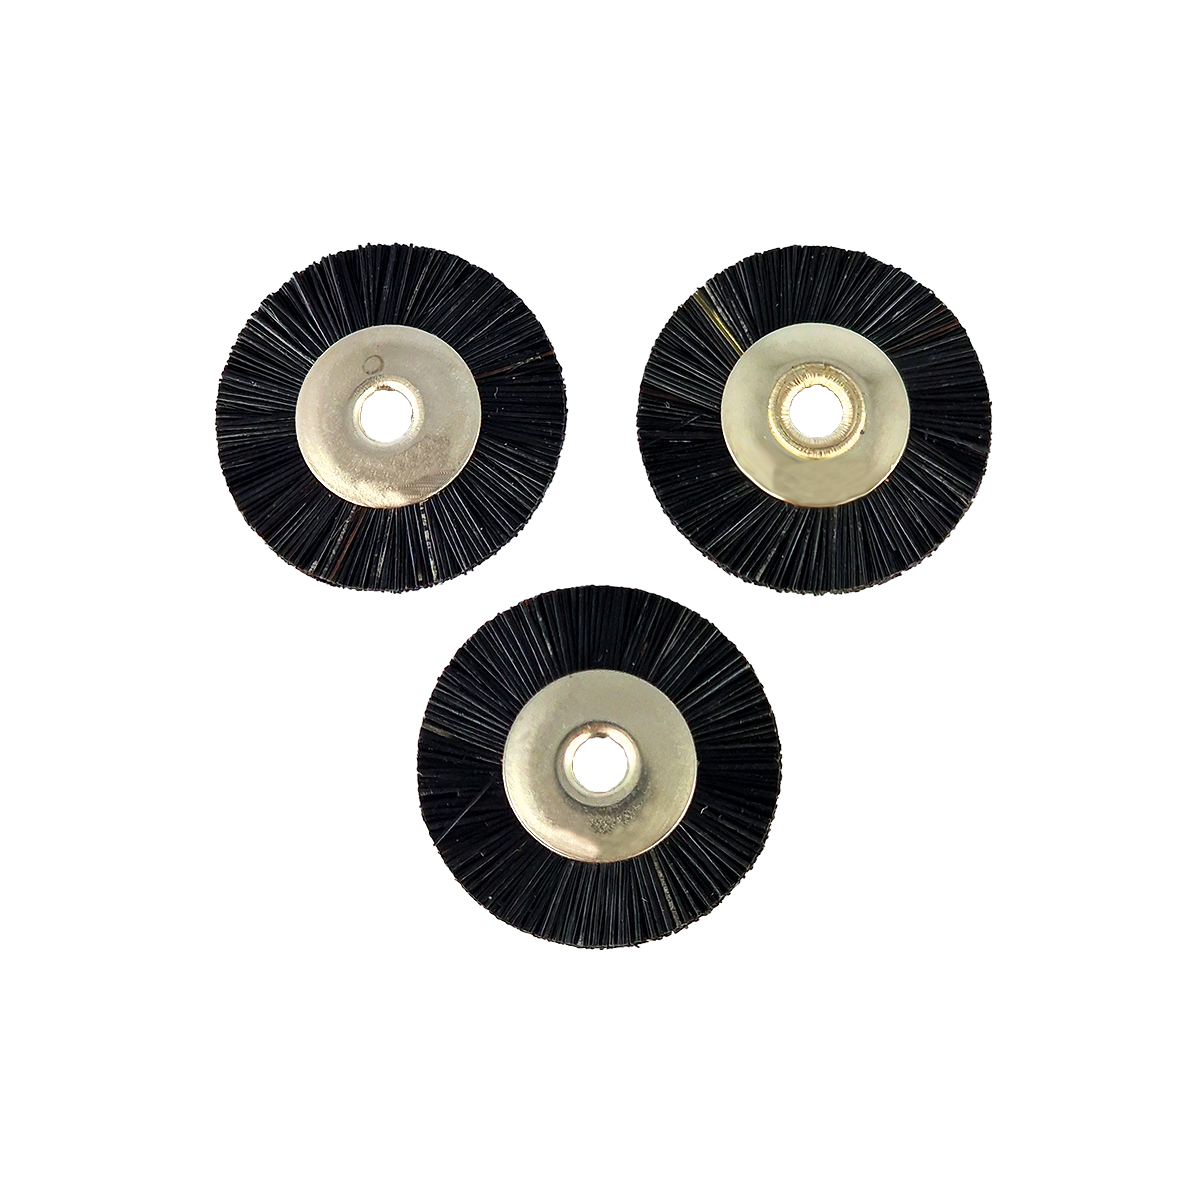 Miniaturbürste aus Chungking-Borsten, 21 mm, schwarz/hart, 100 Stück